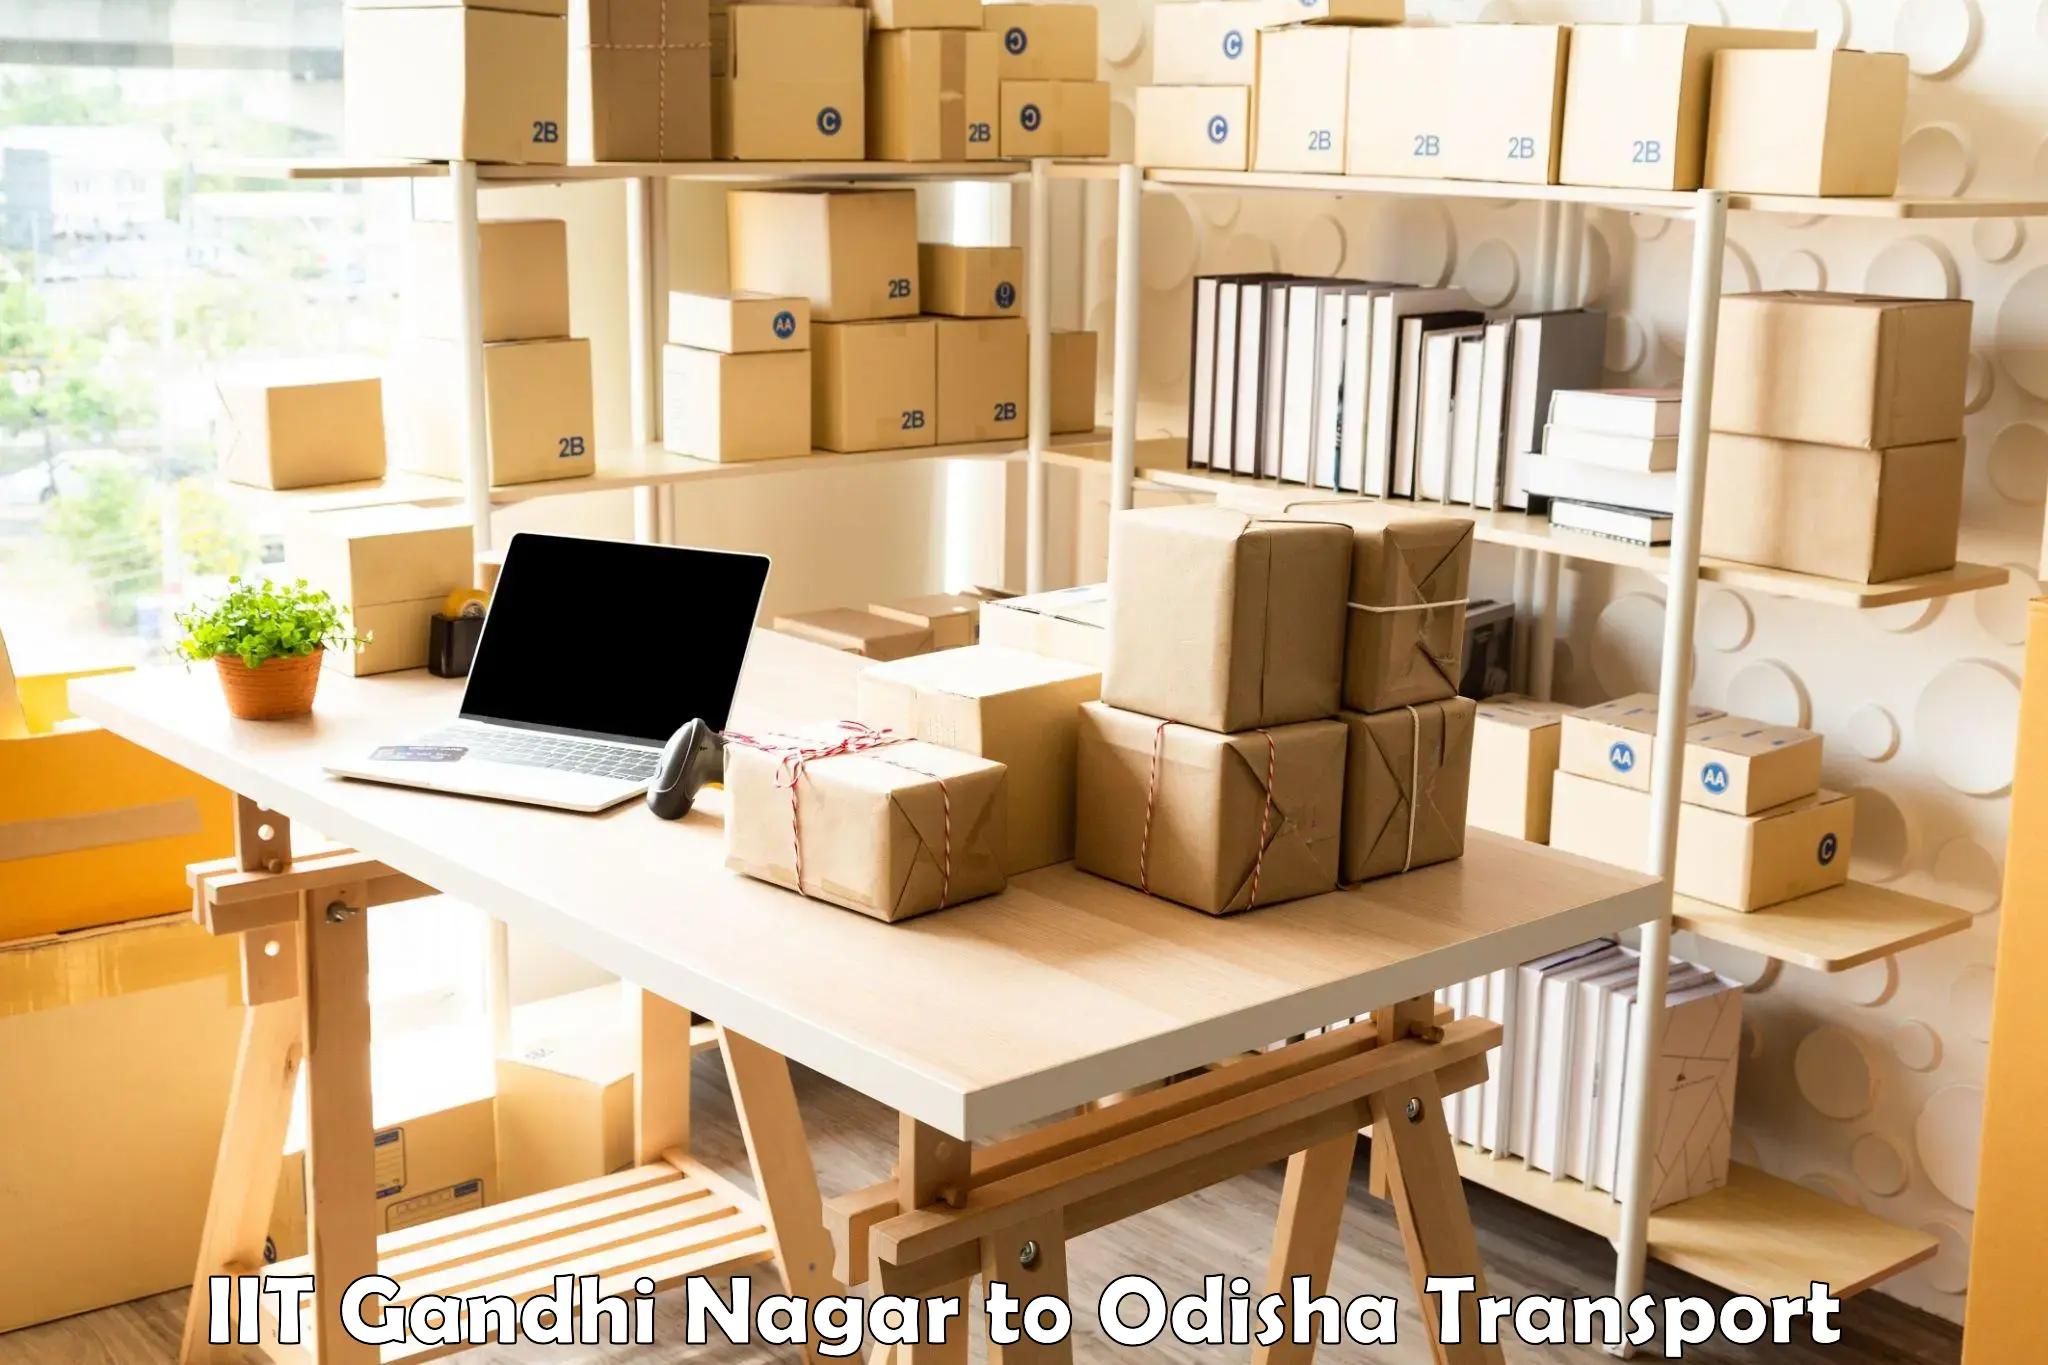 Cargo transportation services IIT Gandhi Nagar to Astaranga